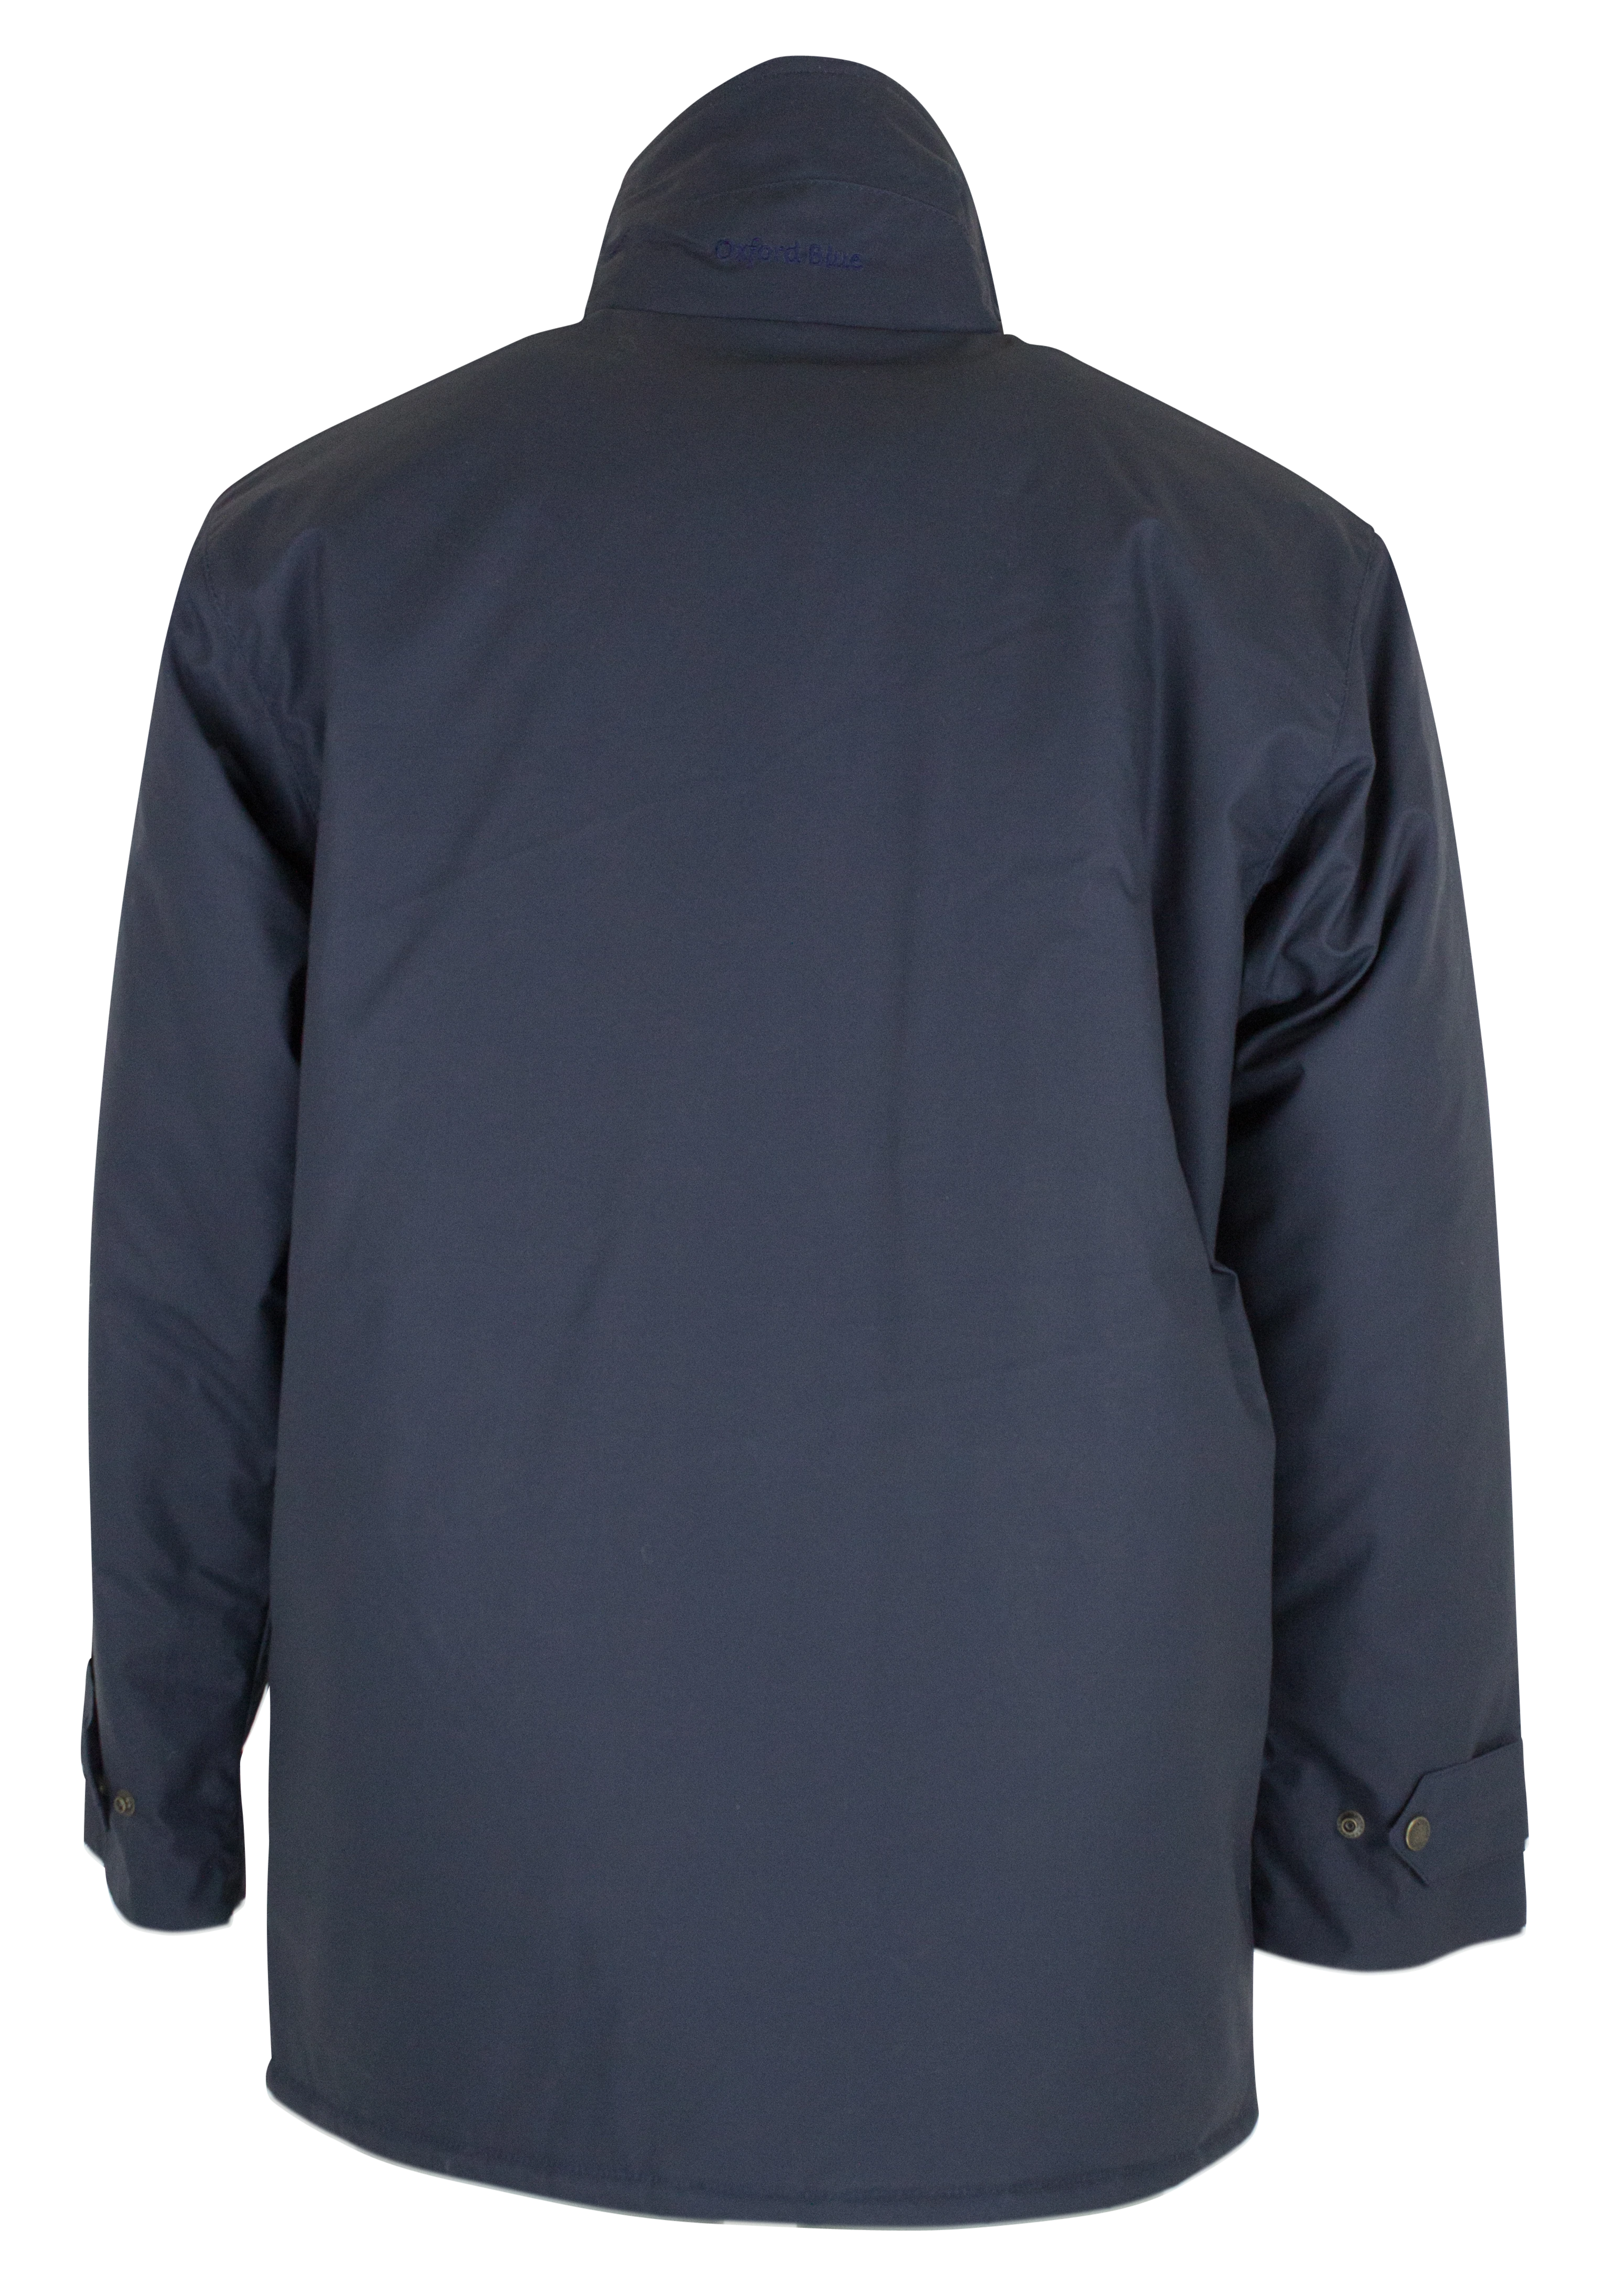 W18 - Men's Knightsbridge Staywax Jacket - NAVY - Oxford Blue